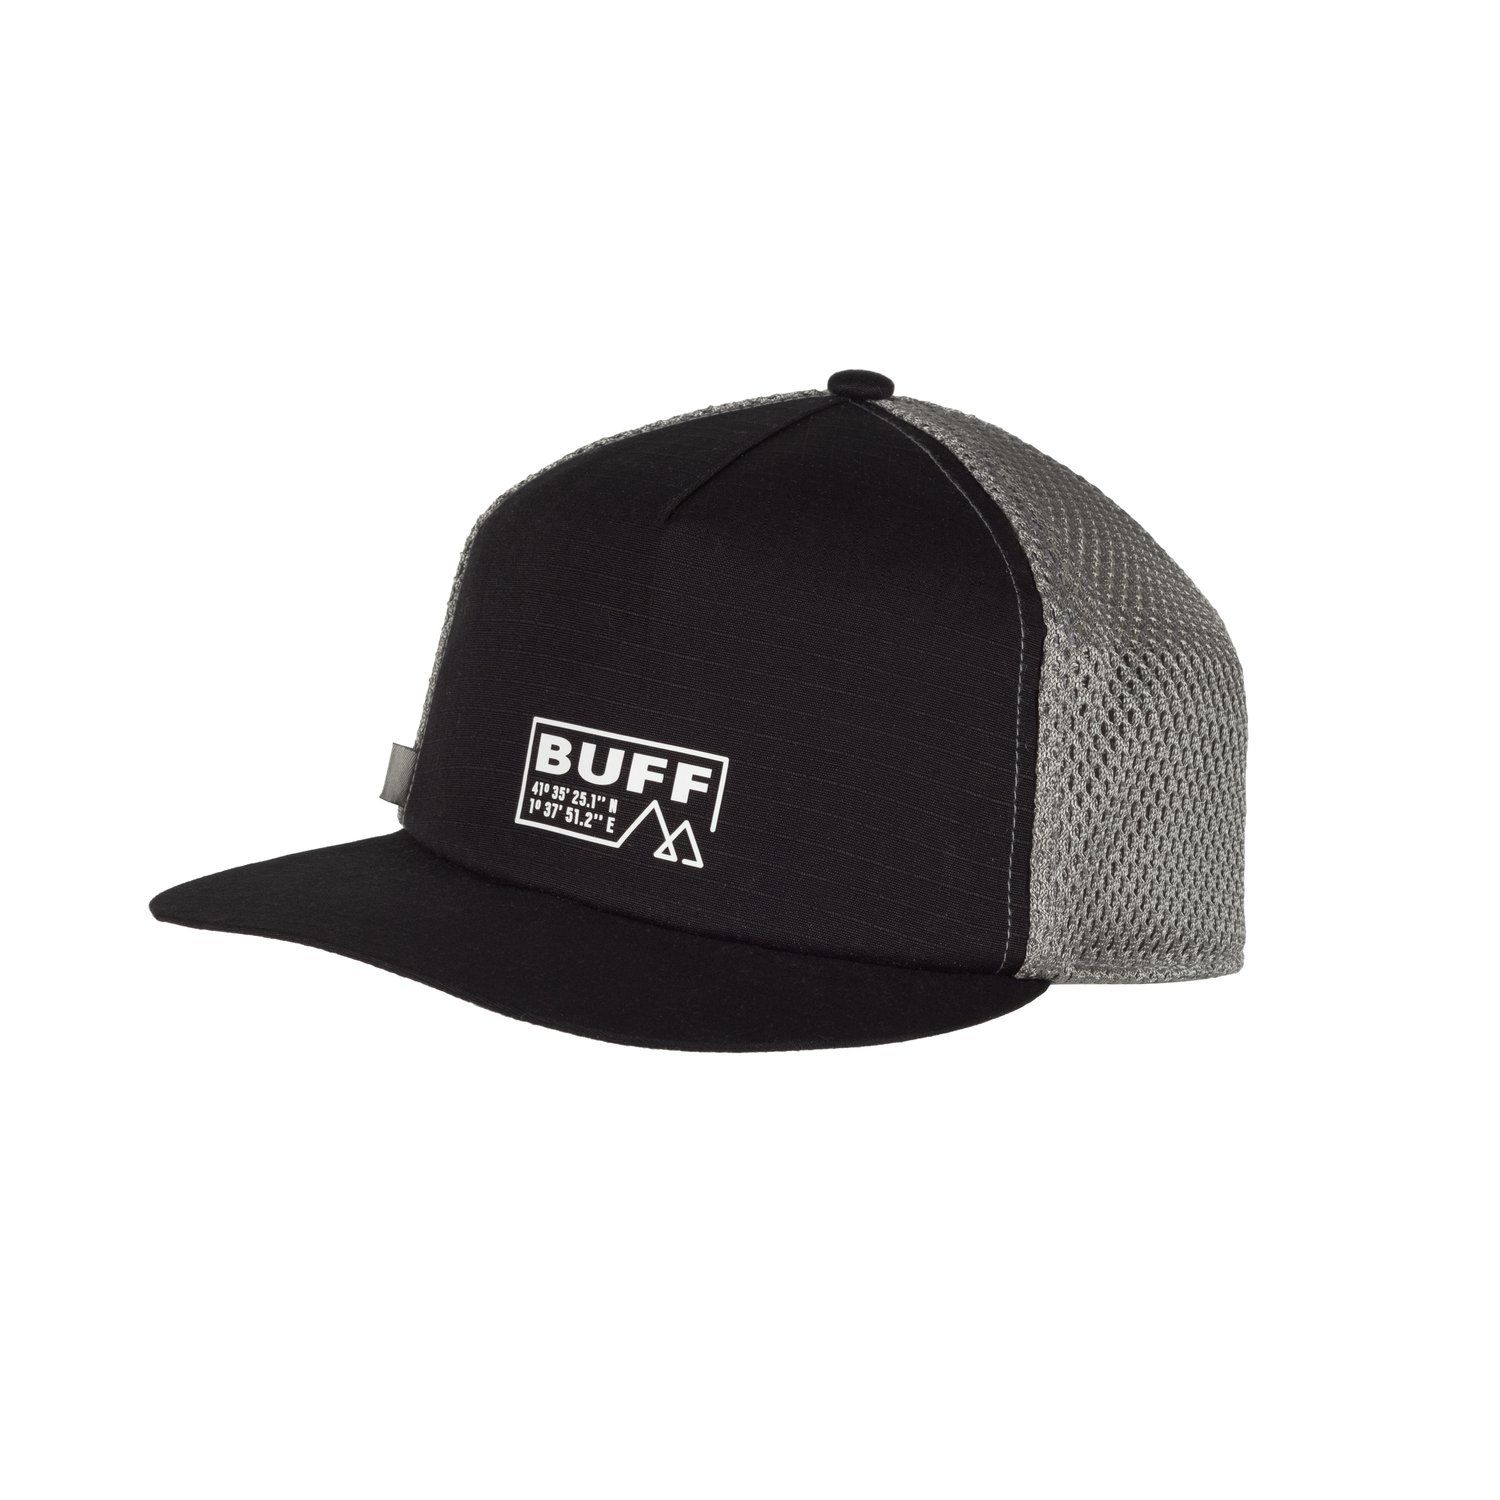 Mũ Buff Pack Trucker Cap - Đen Black